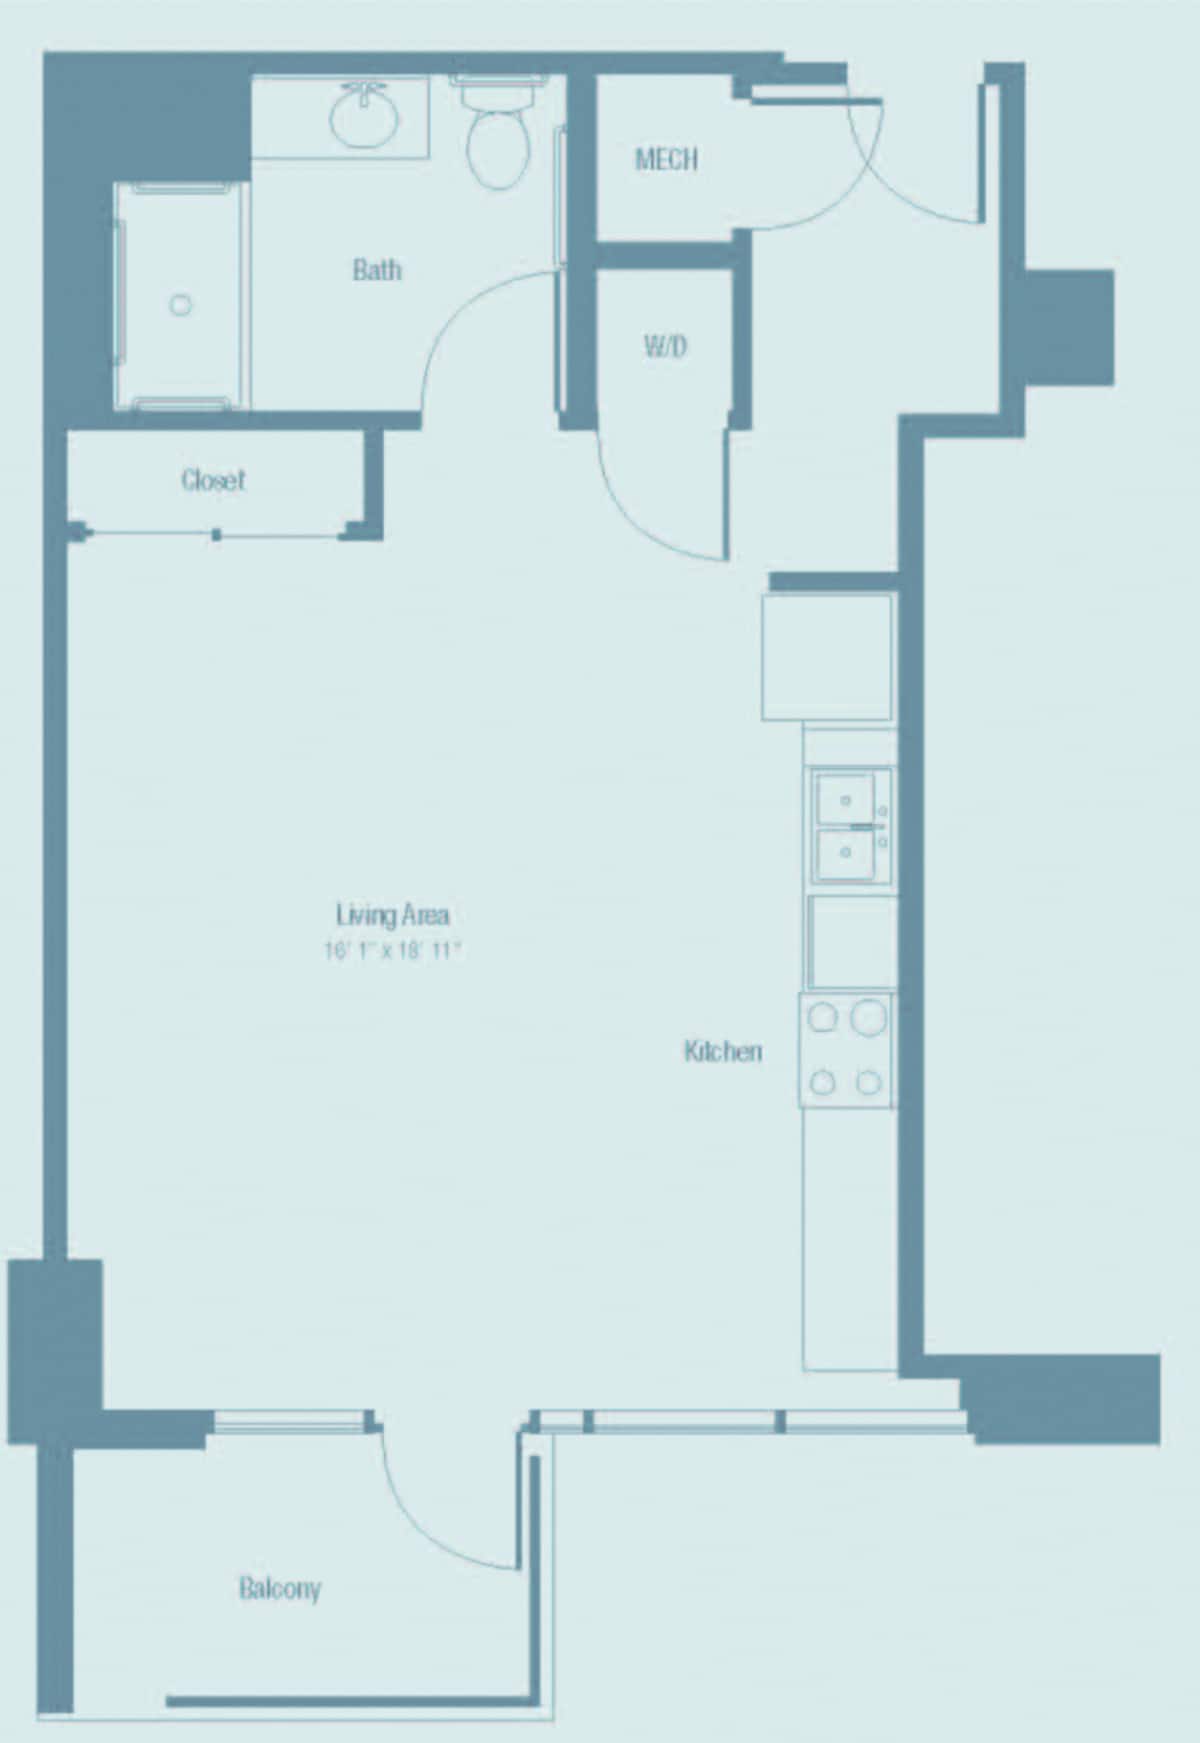 Floorplan diagram for S1H, showing Studio